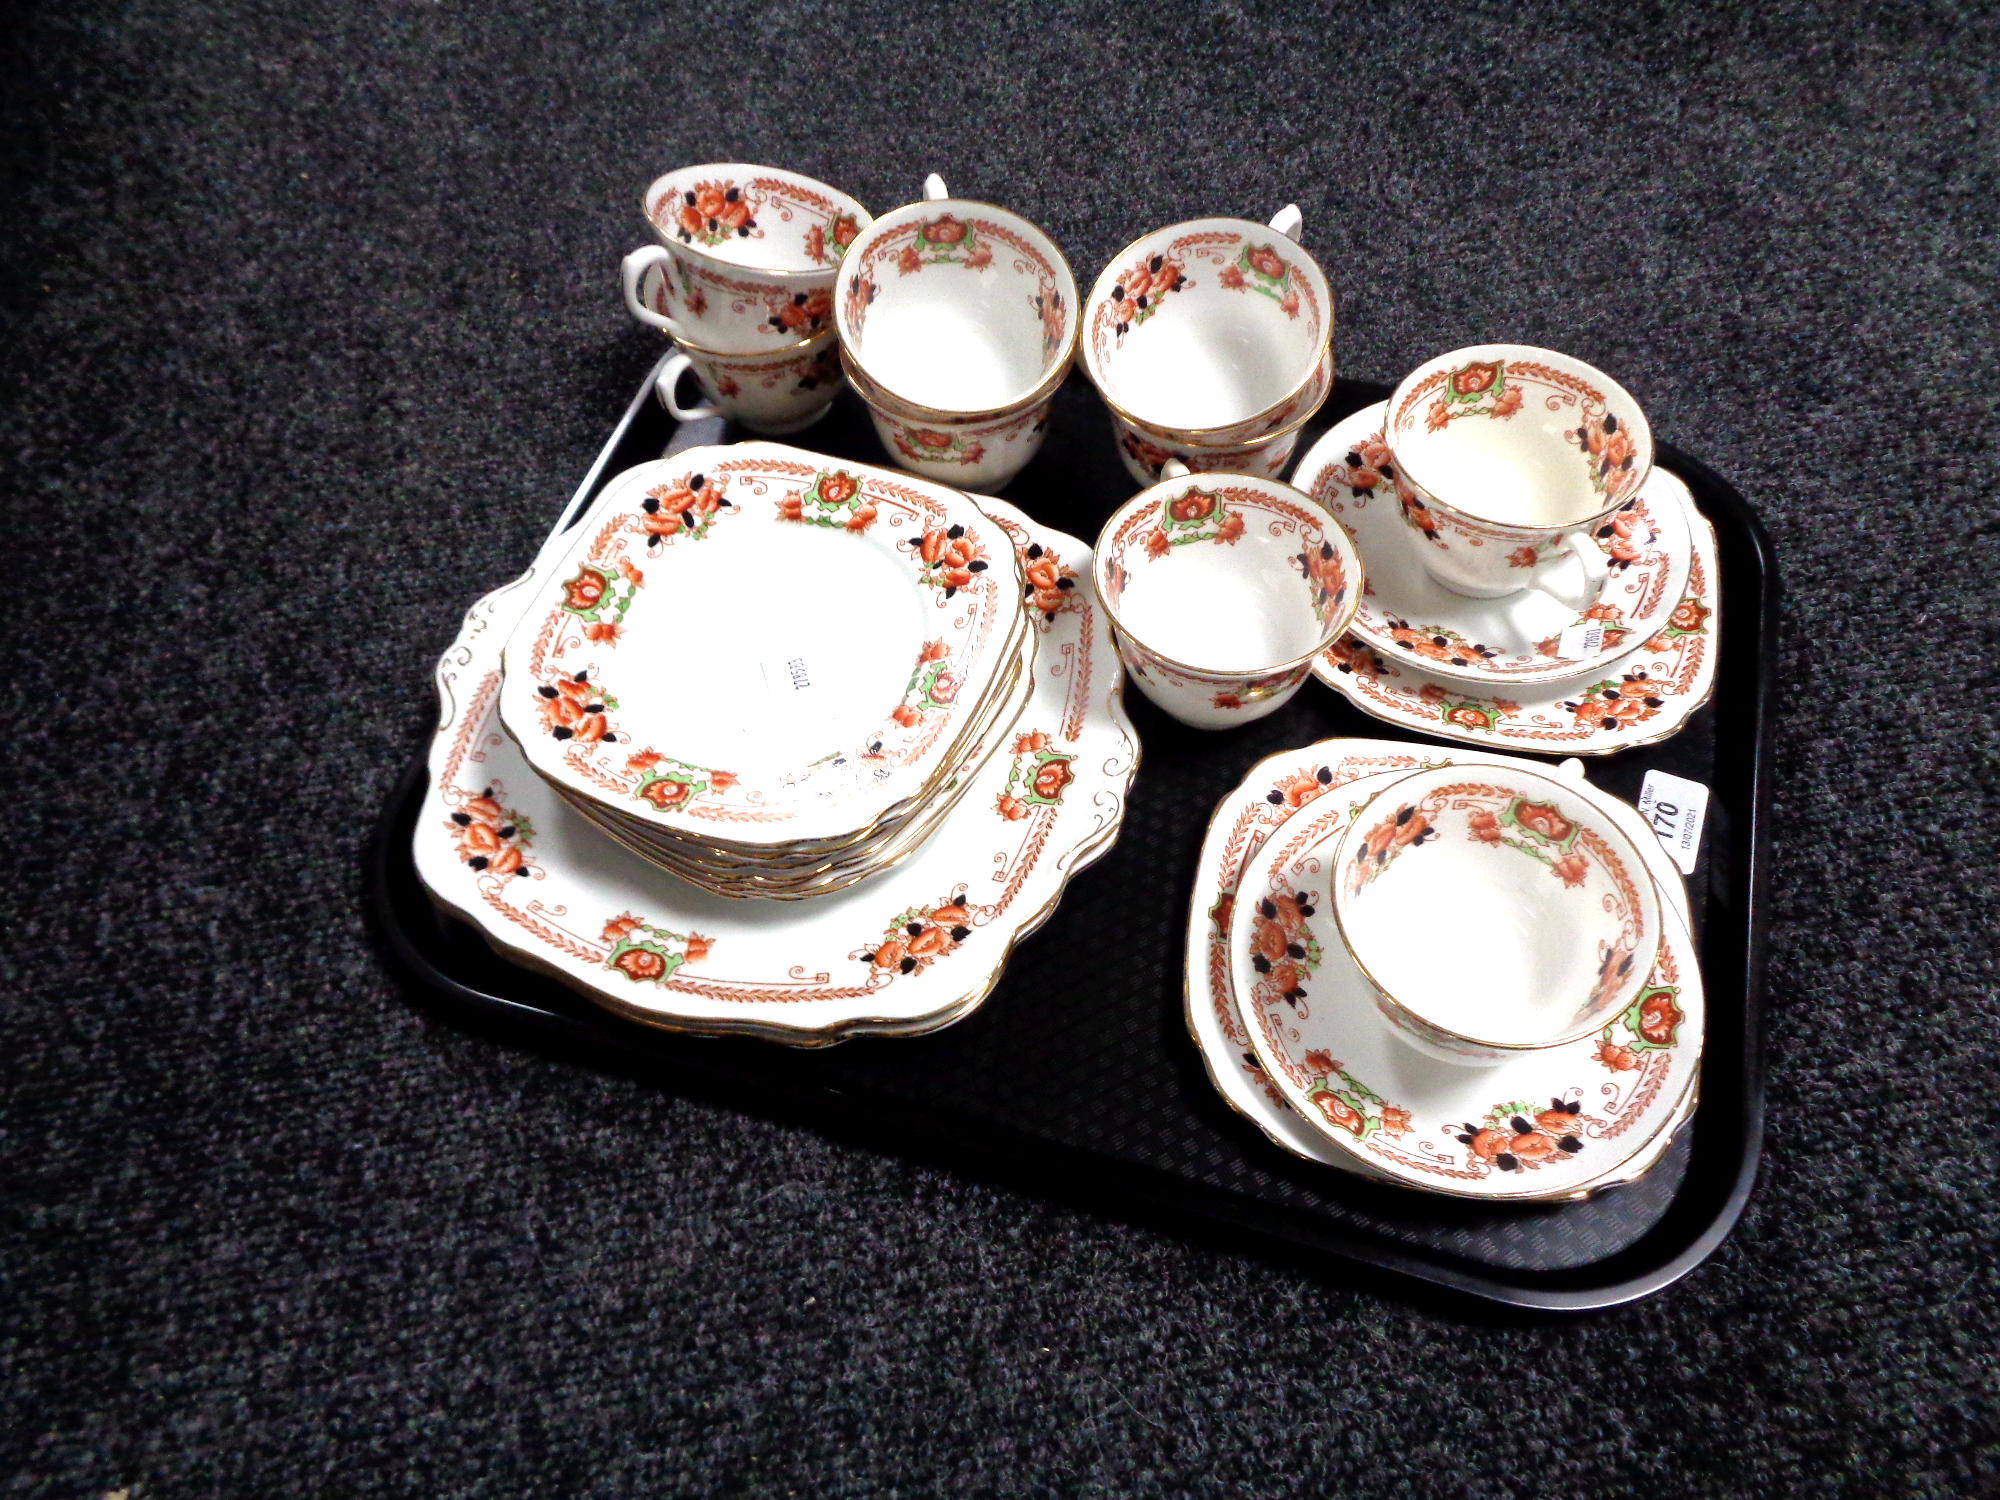 A tray of twenty-five pieces of Royal Albert Crown tea china